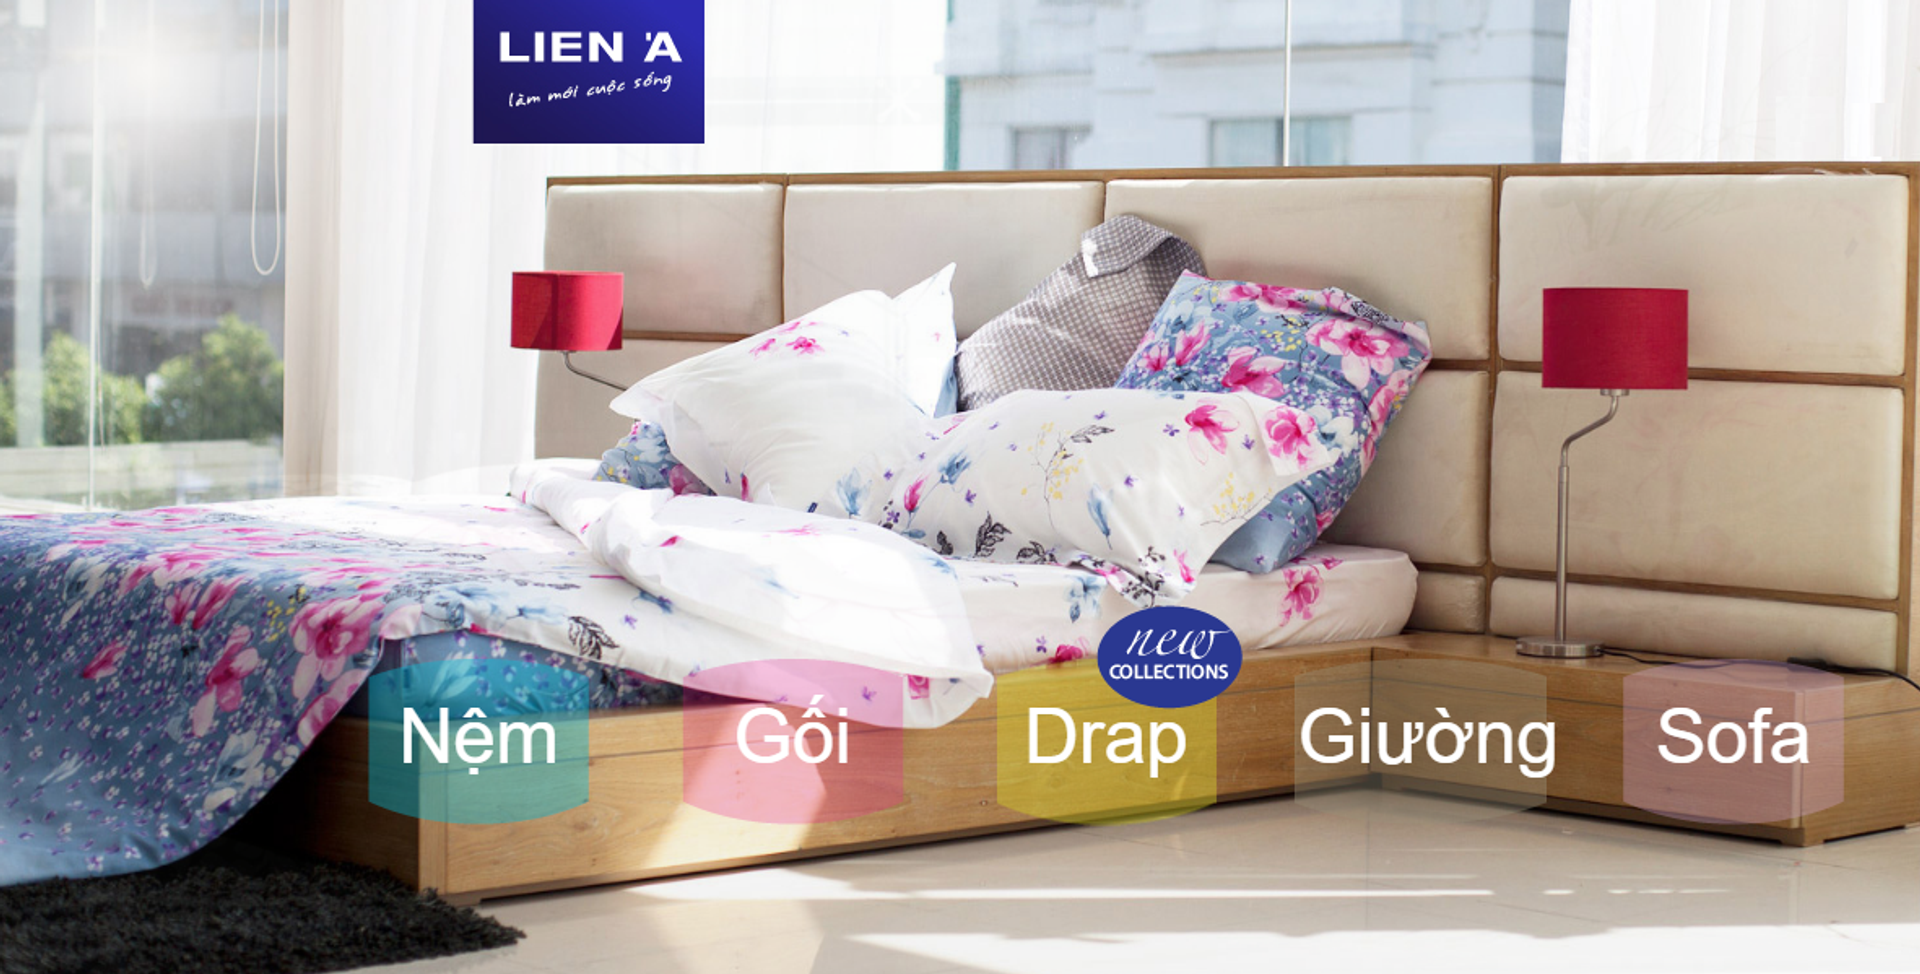 Lien A Company Ltd.